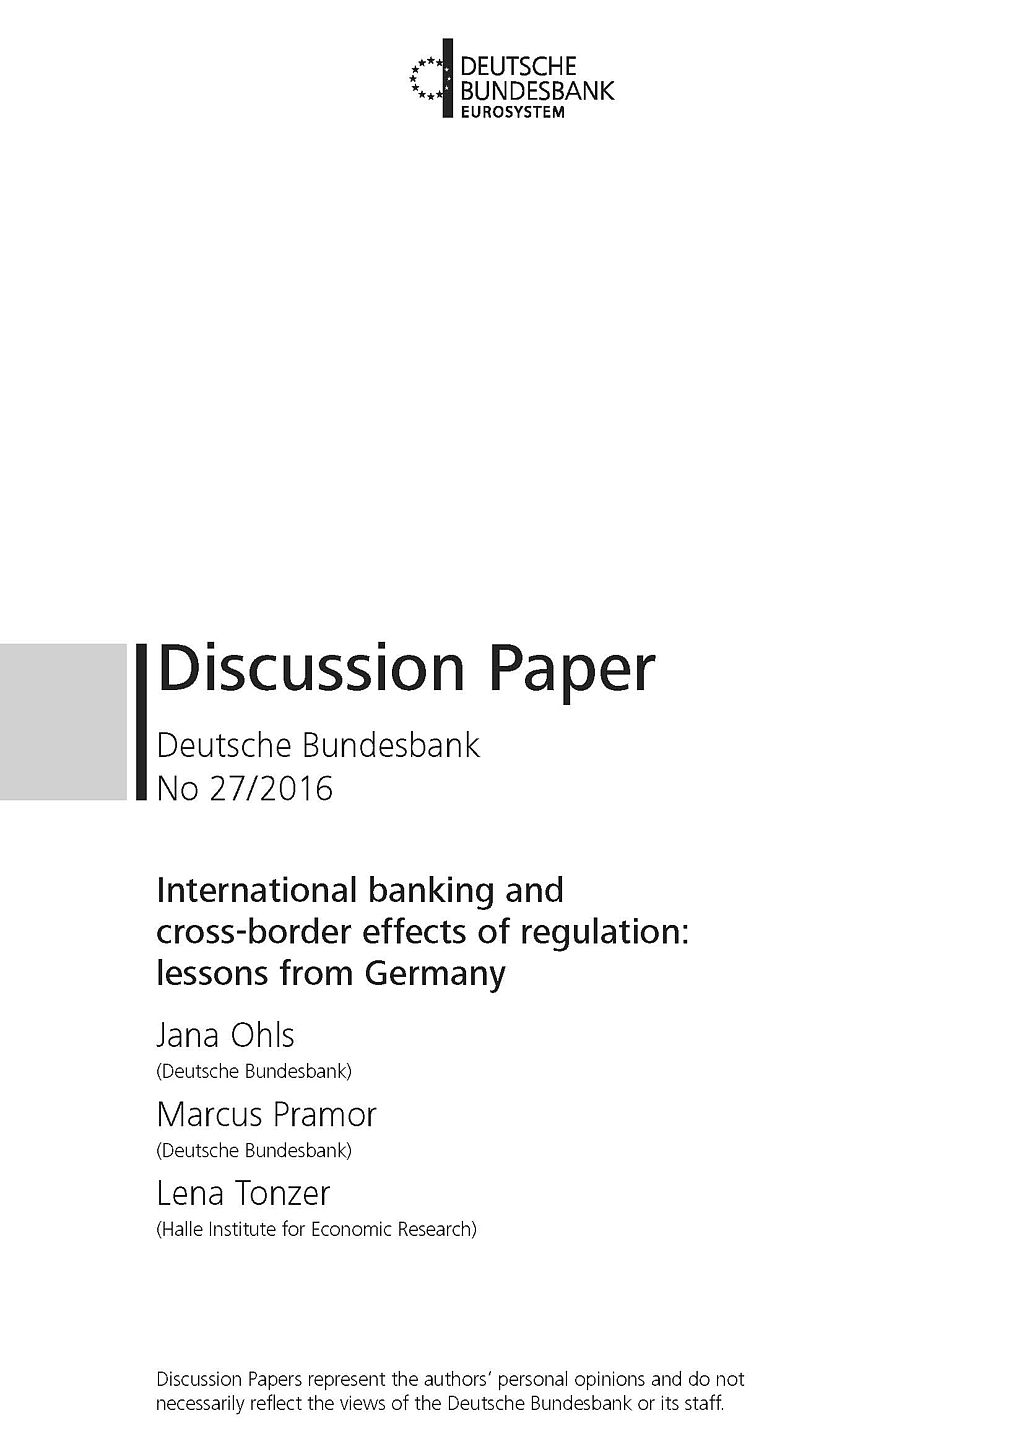 cover_Deutsche-Bundesbank-Discussion-Paper_2016-27.jpg